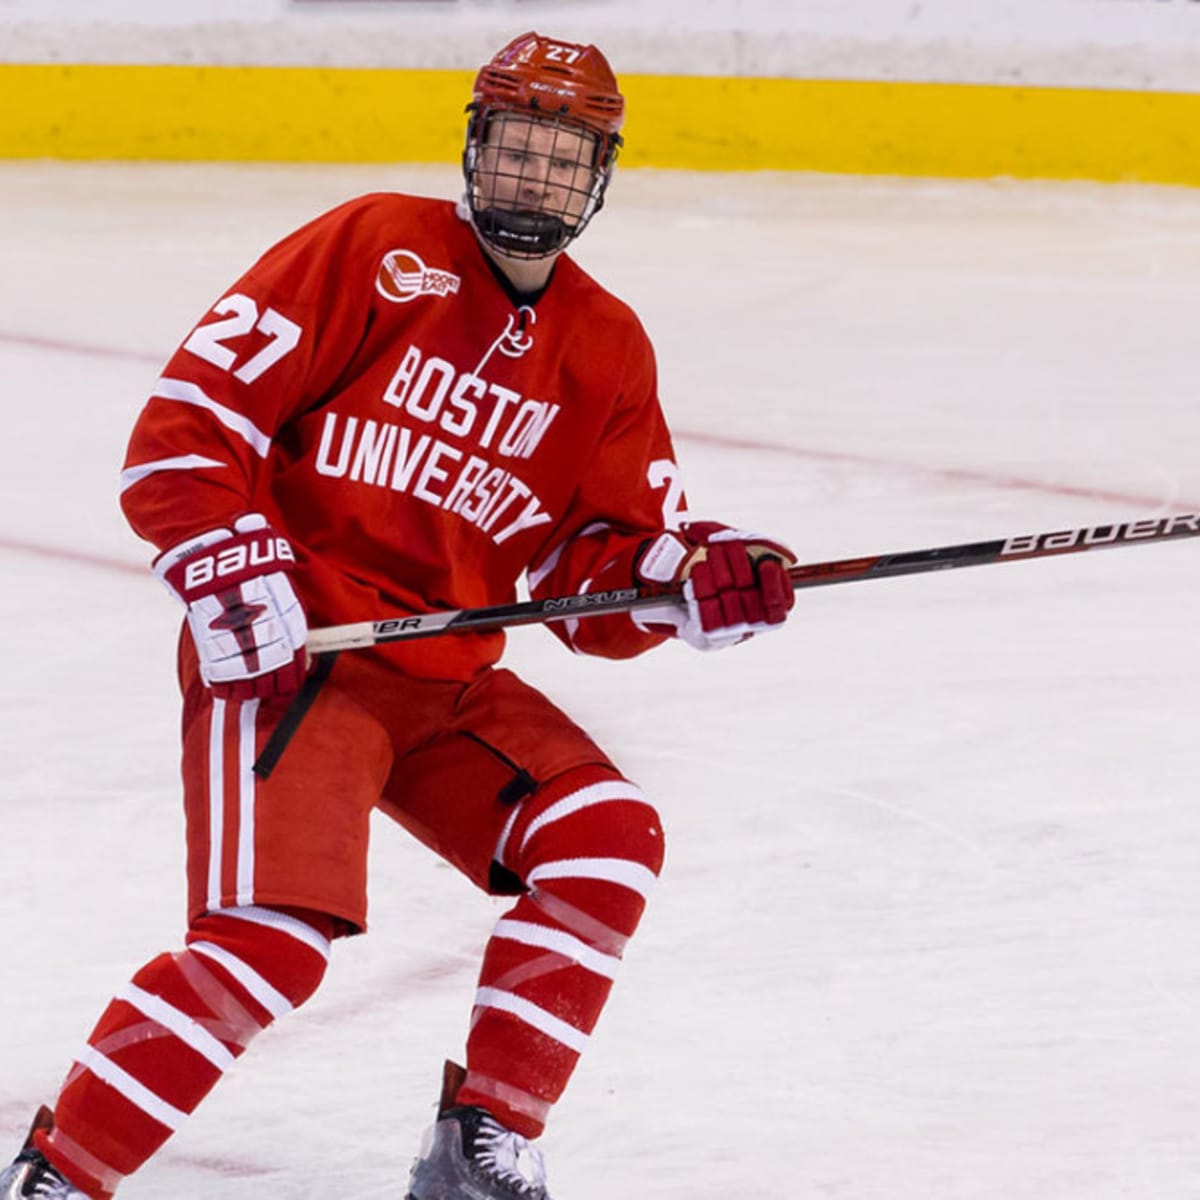 20 questions for men's hockey freshman forward Brady Tkachuk – The